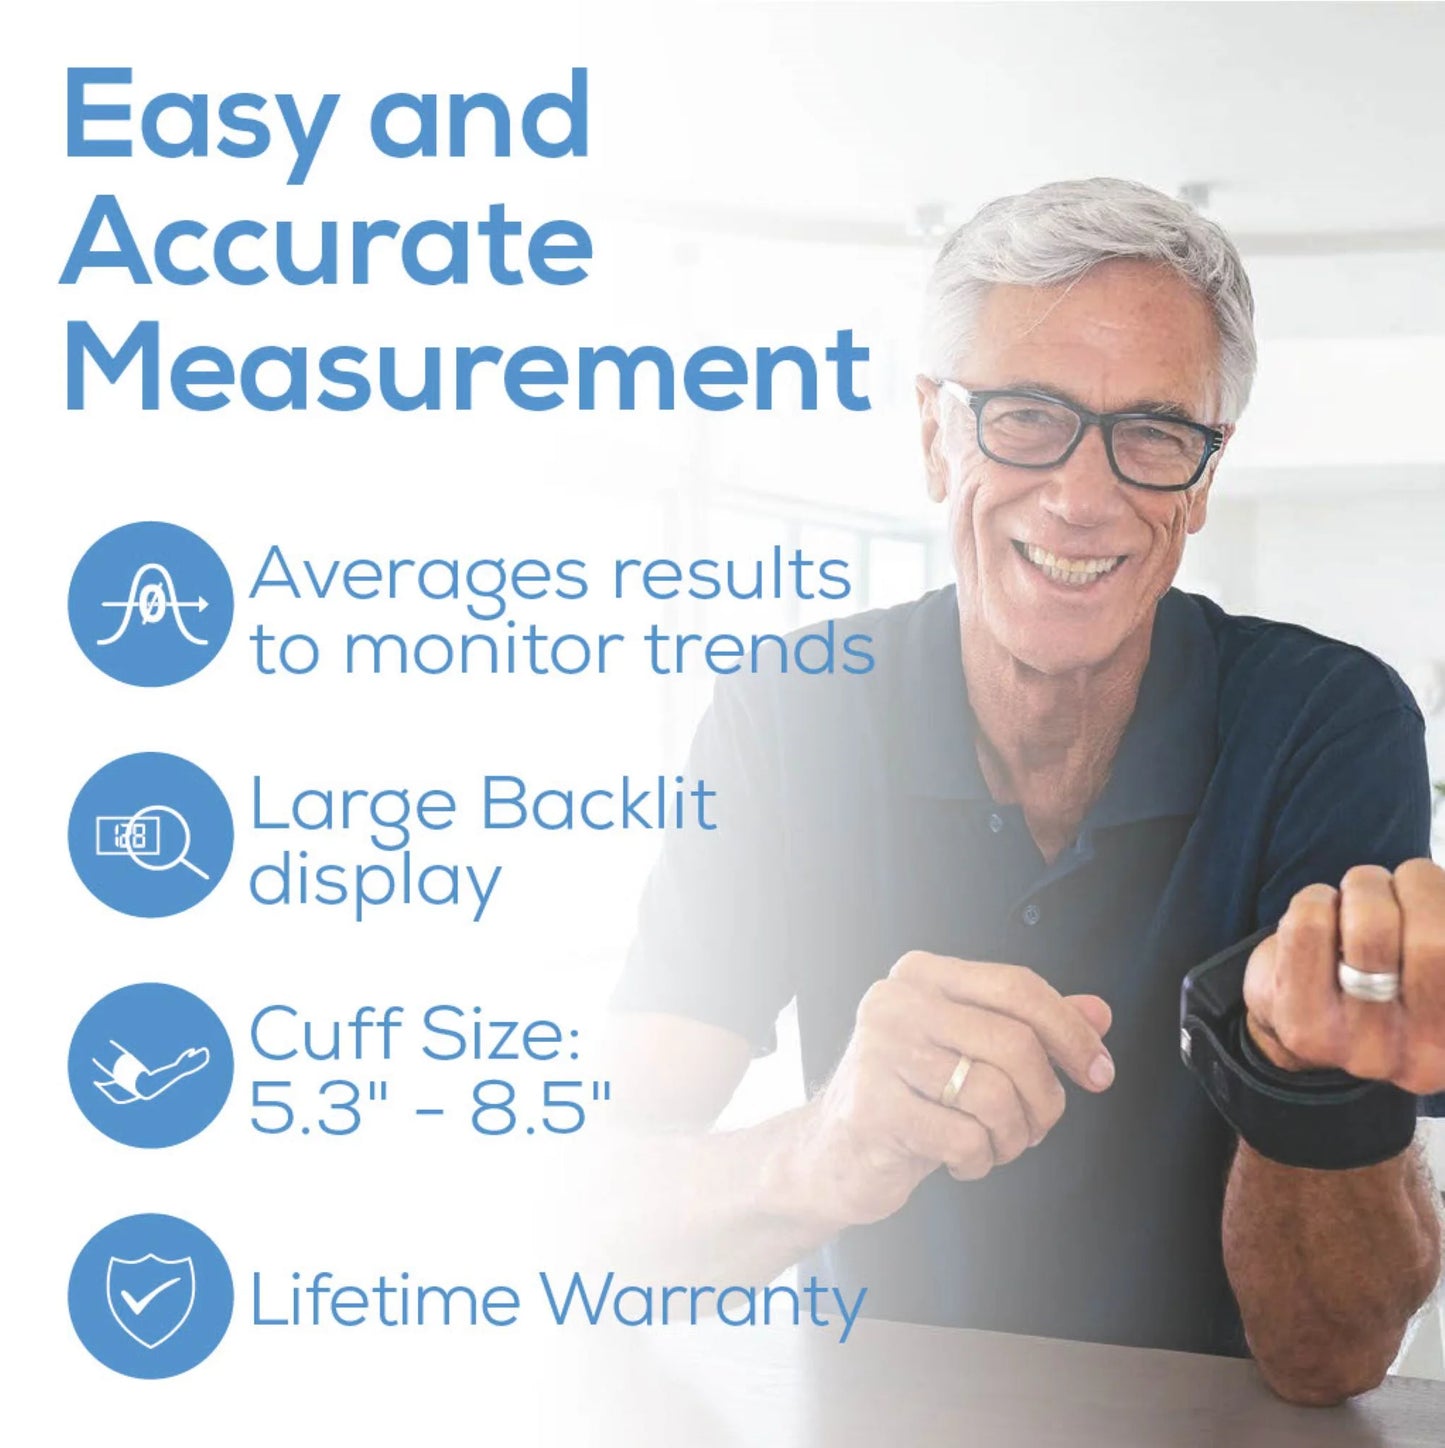 Beurer Premium 800W Wrist Blood Pressure Monitor with Bluetooth